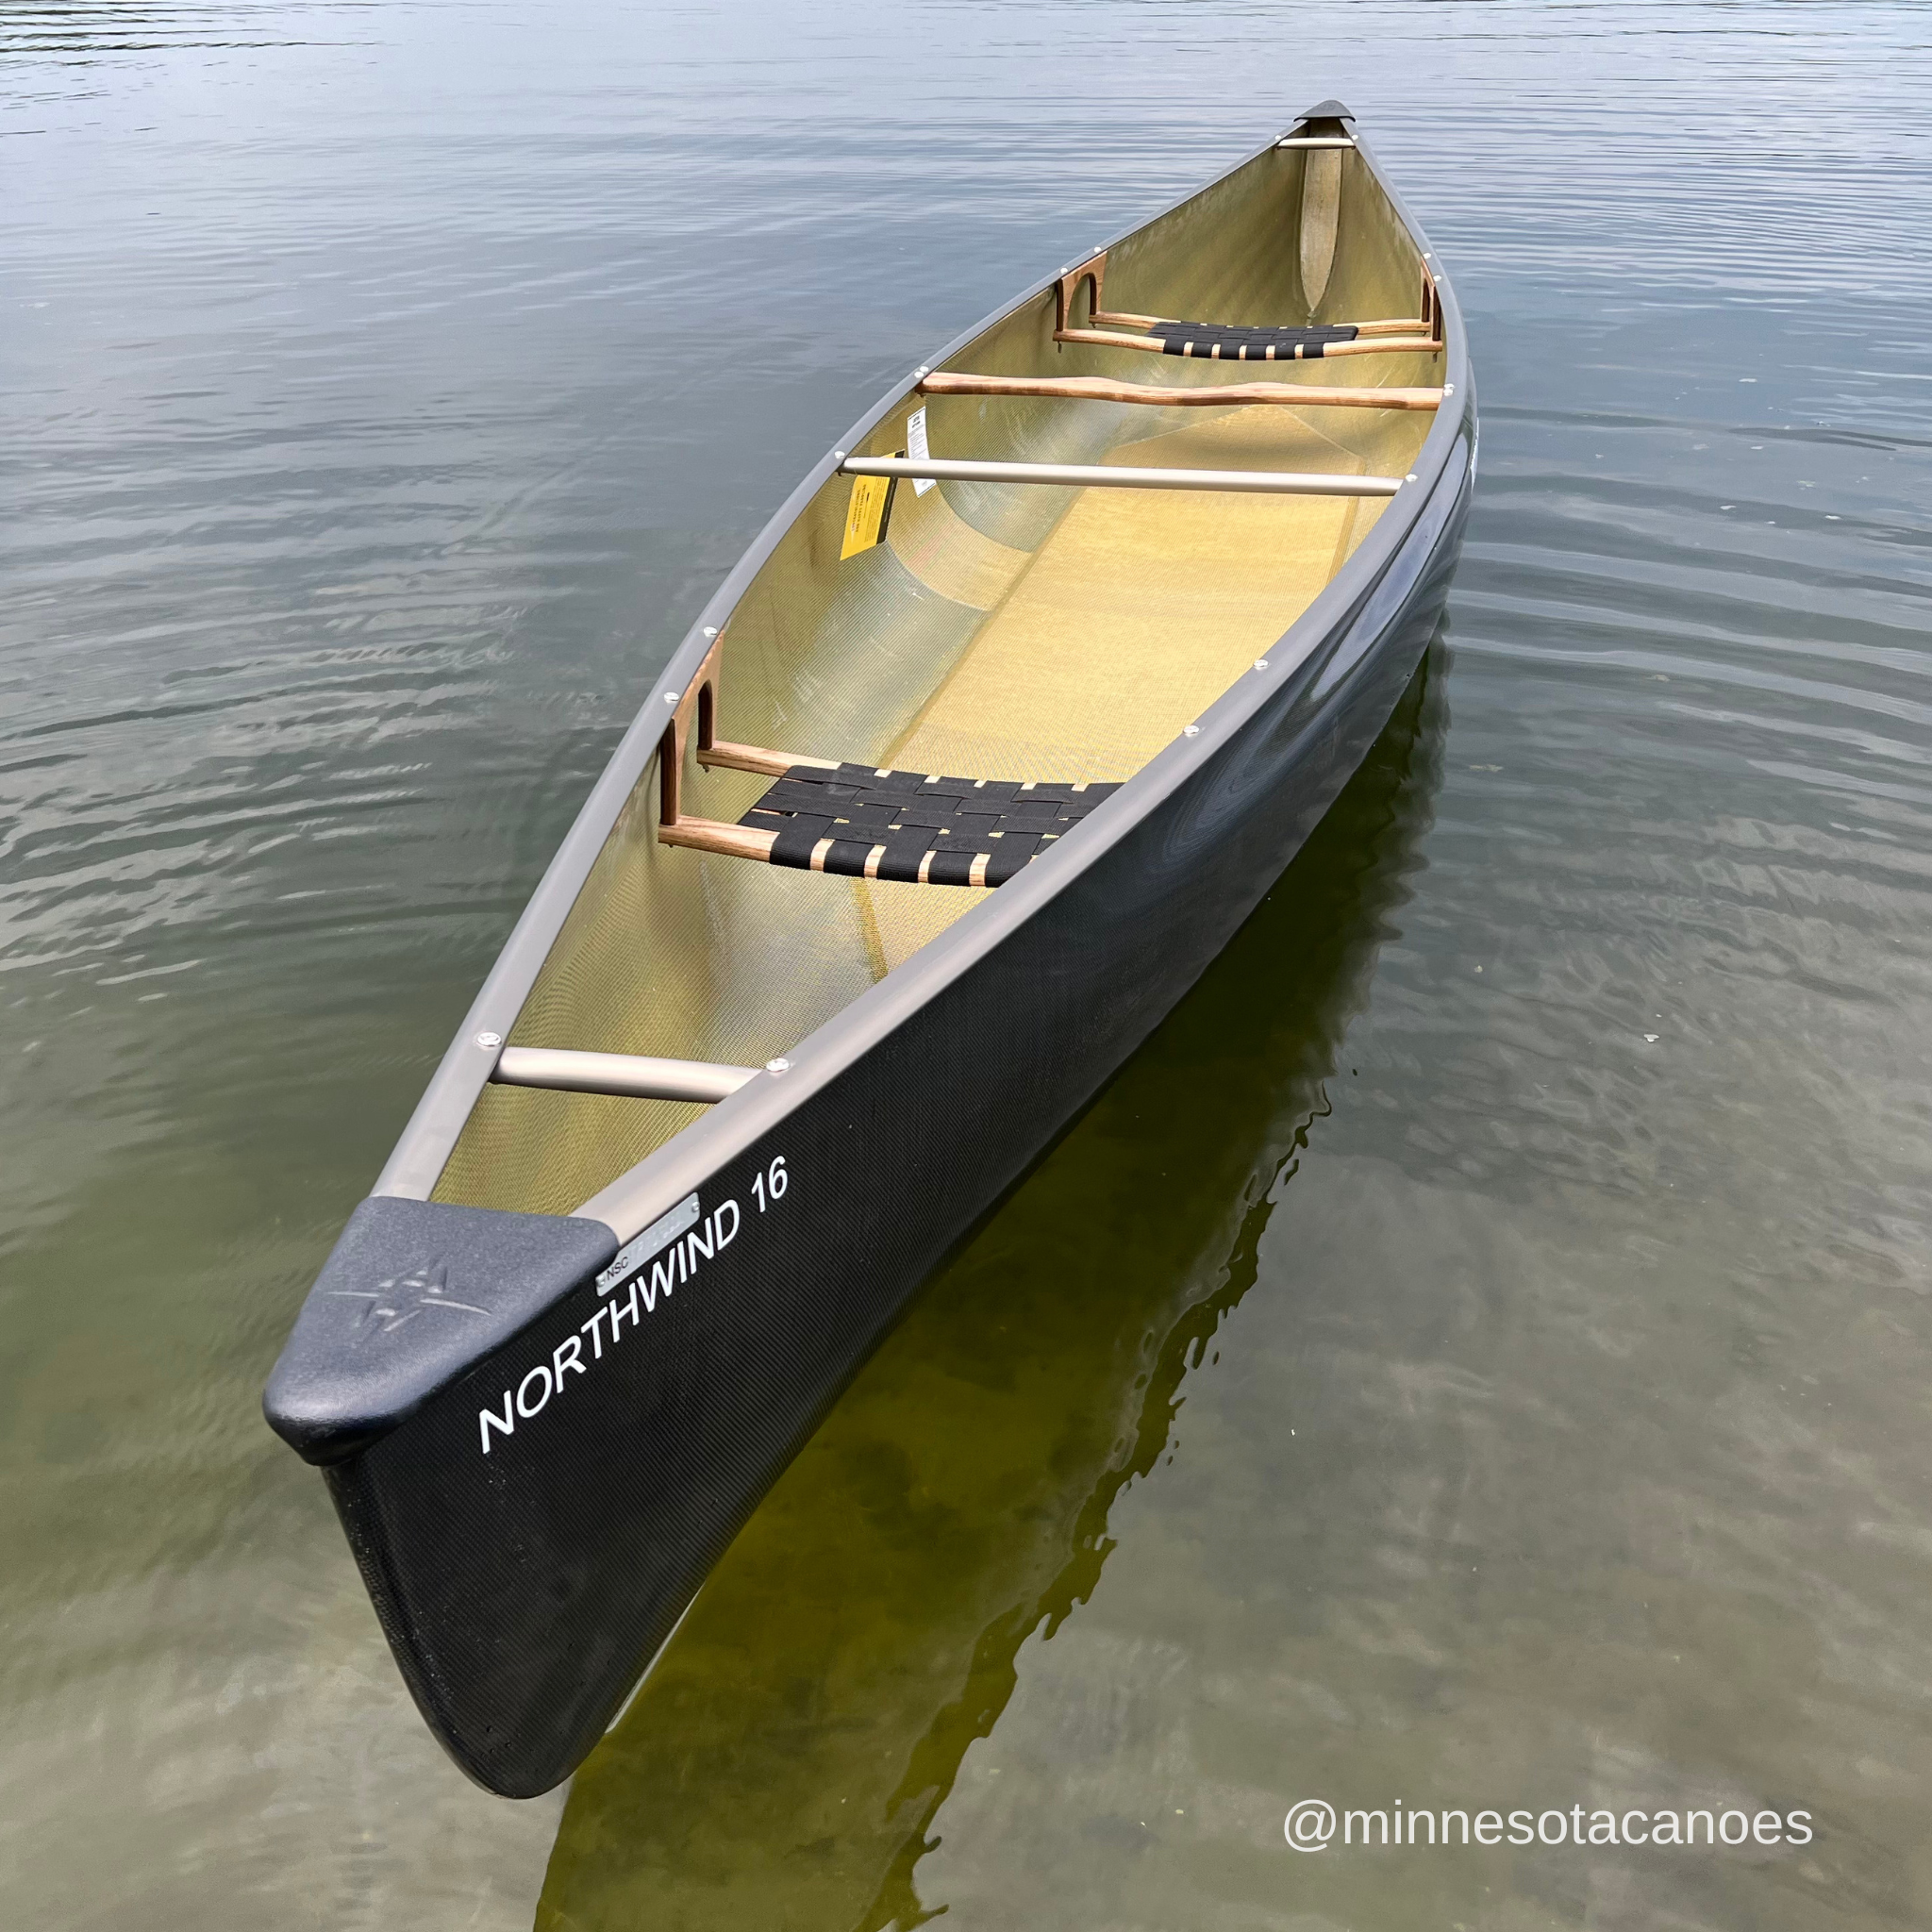 NORTHWIND 16 (16' 6") BlackLite Tandem Northstar Canoe